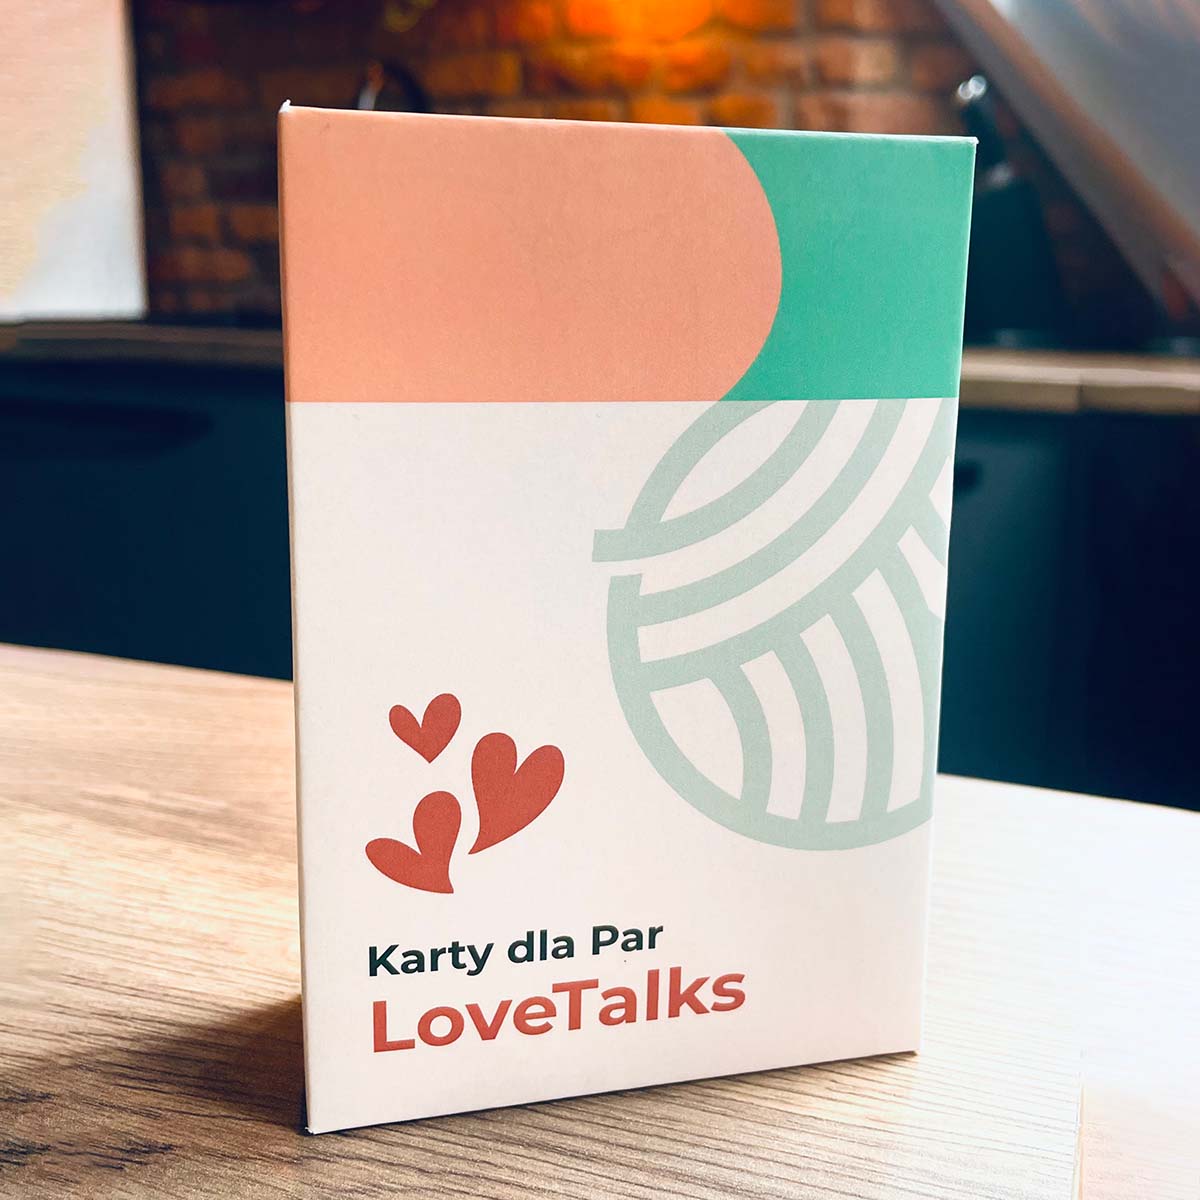 Karty dla Par LoveTalks | Risify.pl